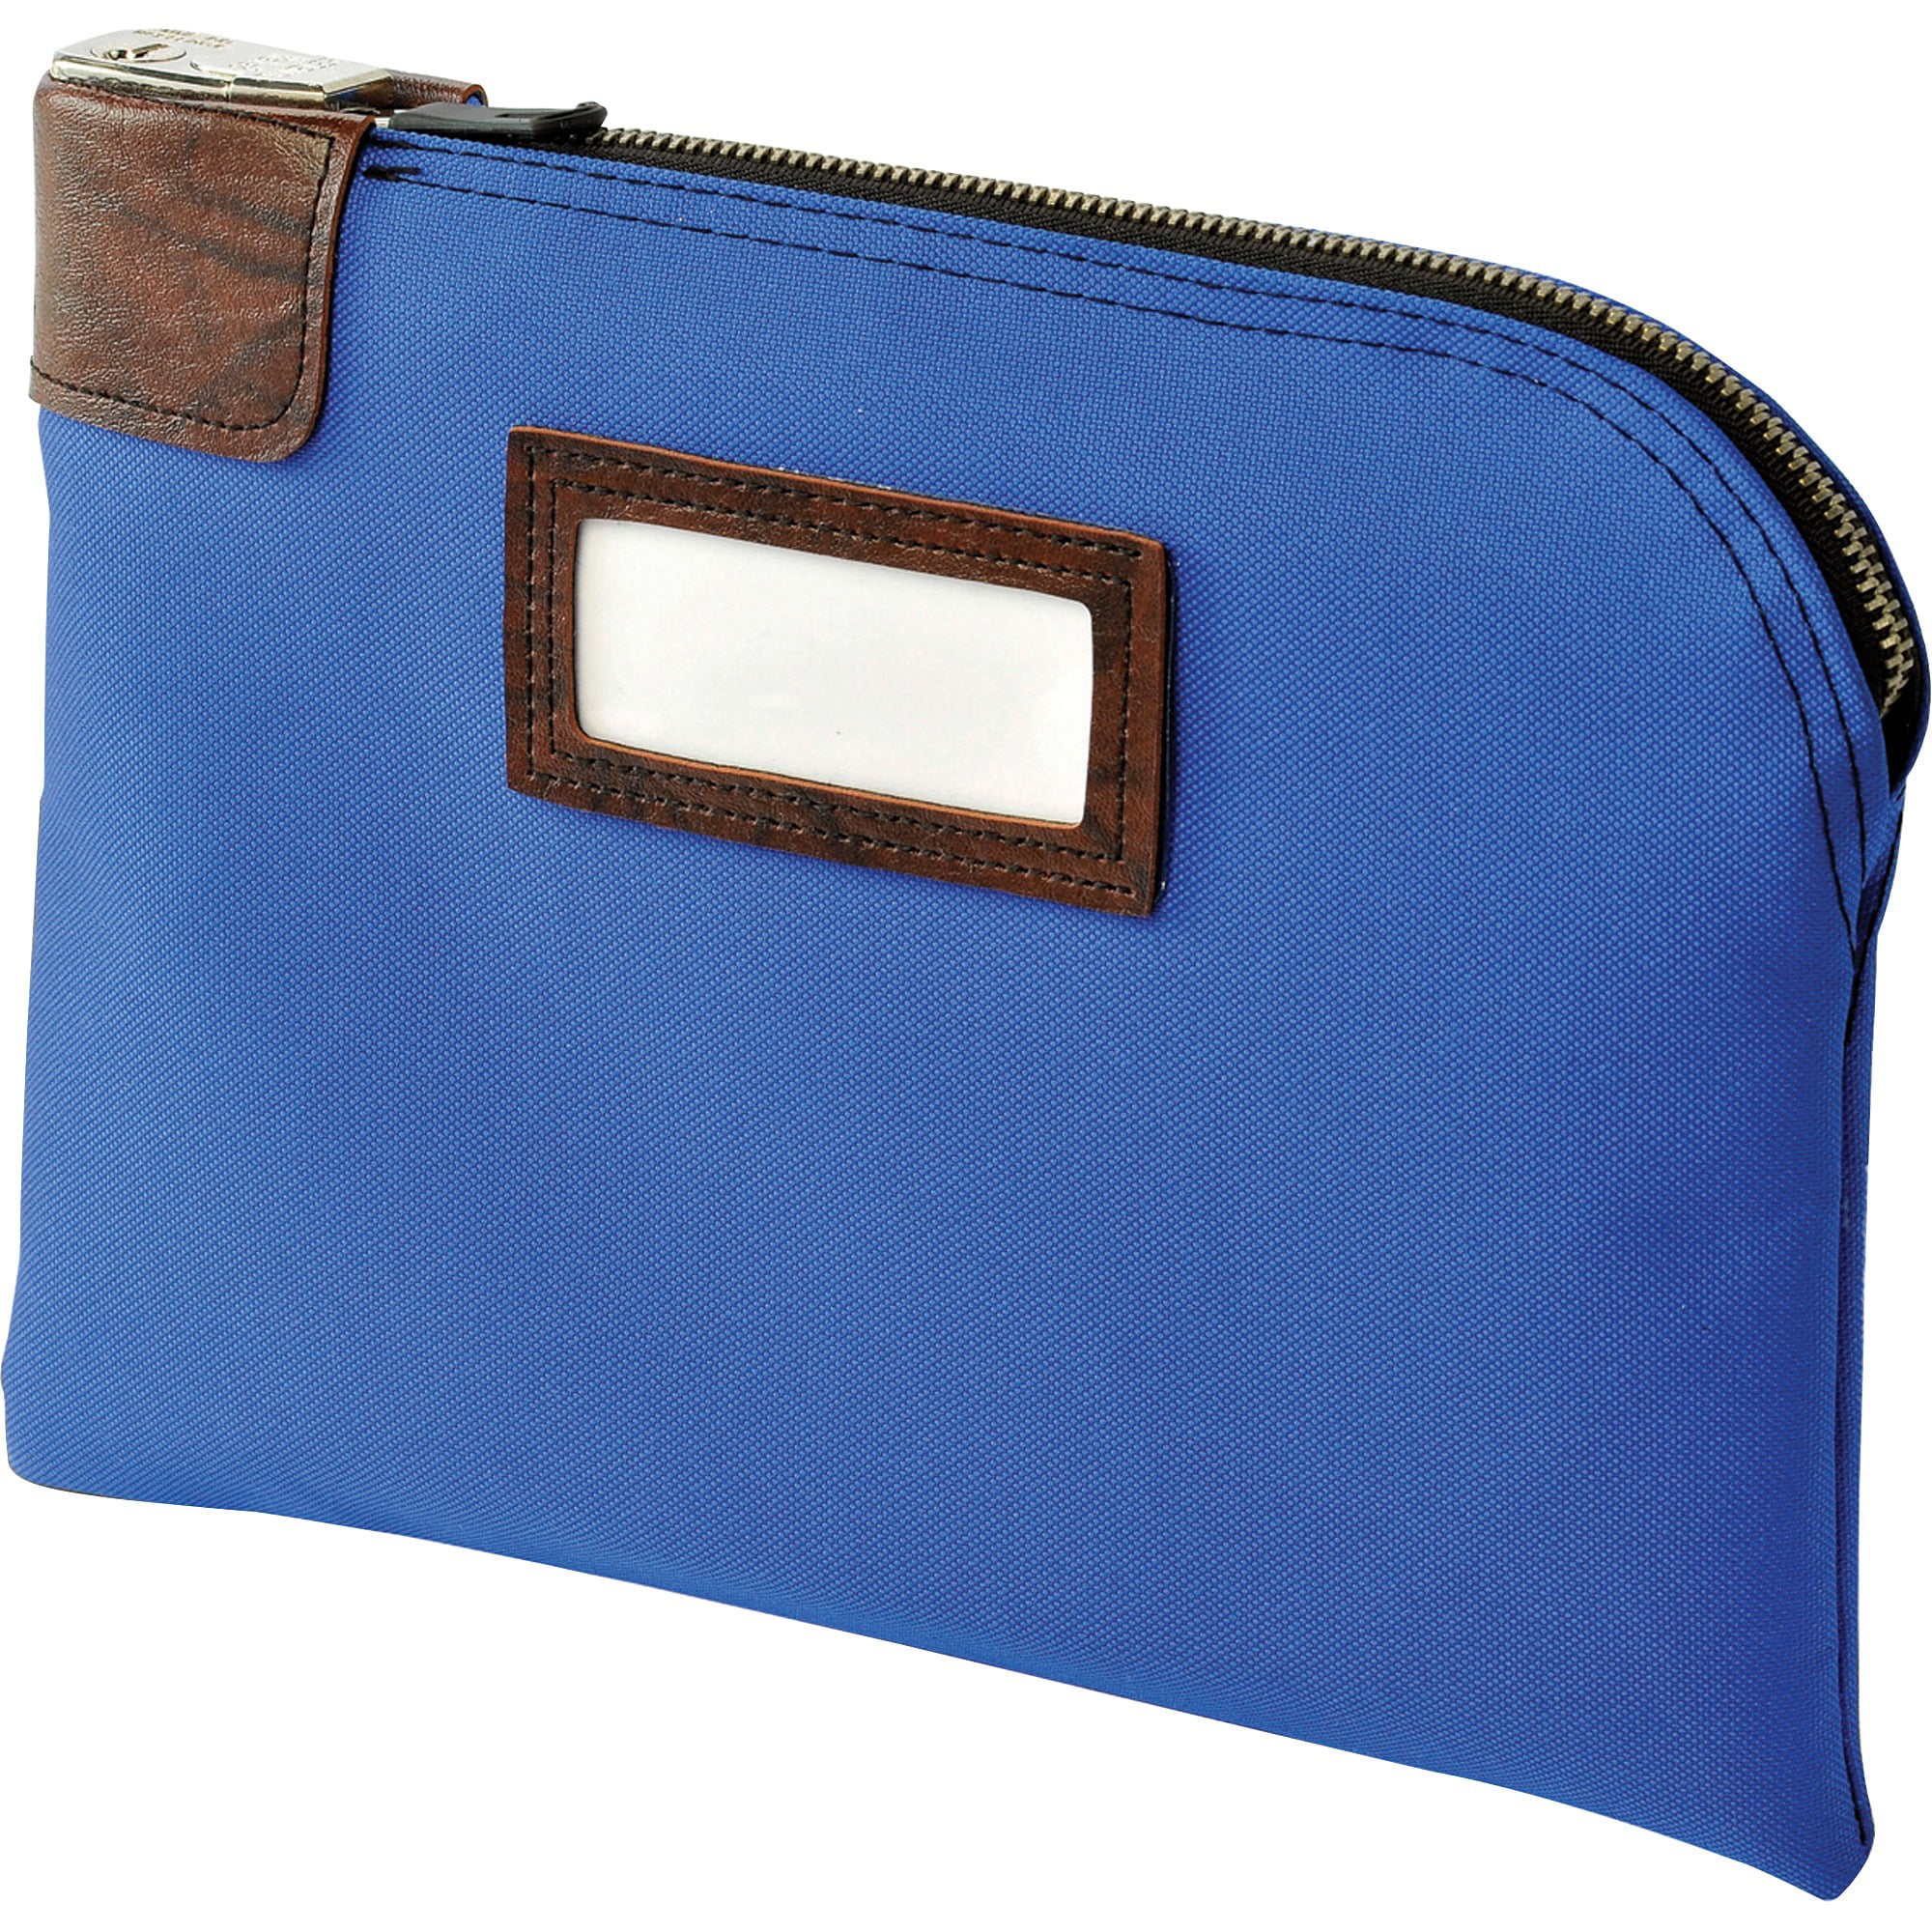 BISupplyLocking Money Bag Lock Bag Bank Bag with Lock Cash Bag in Navy Blue